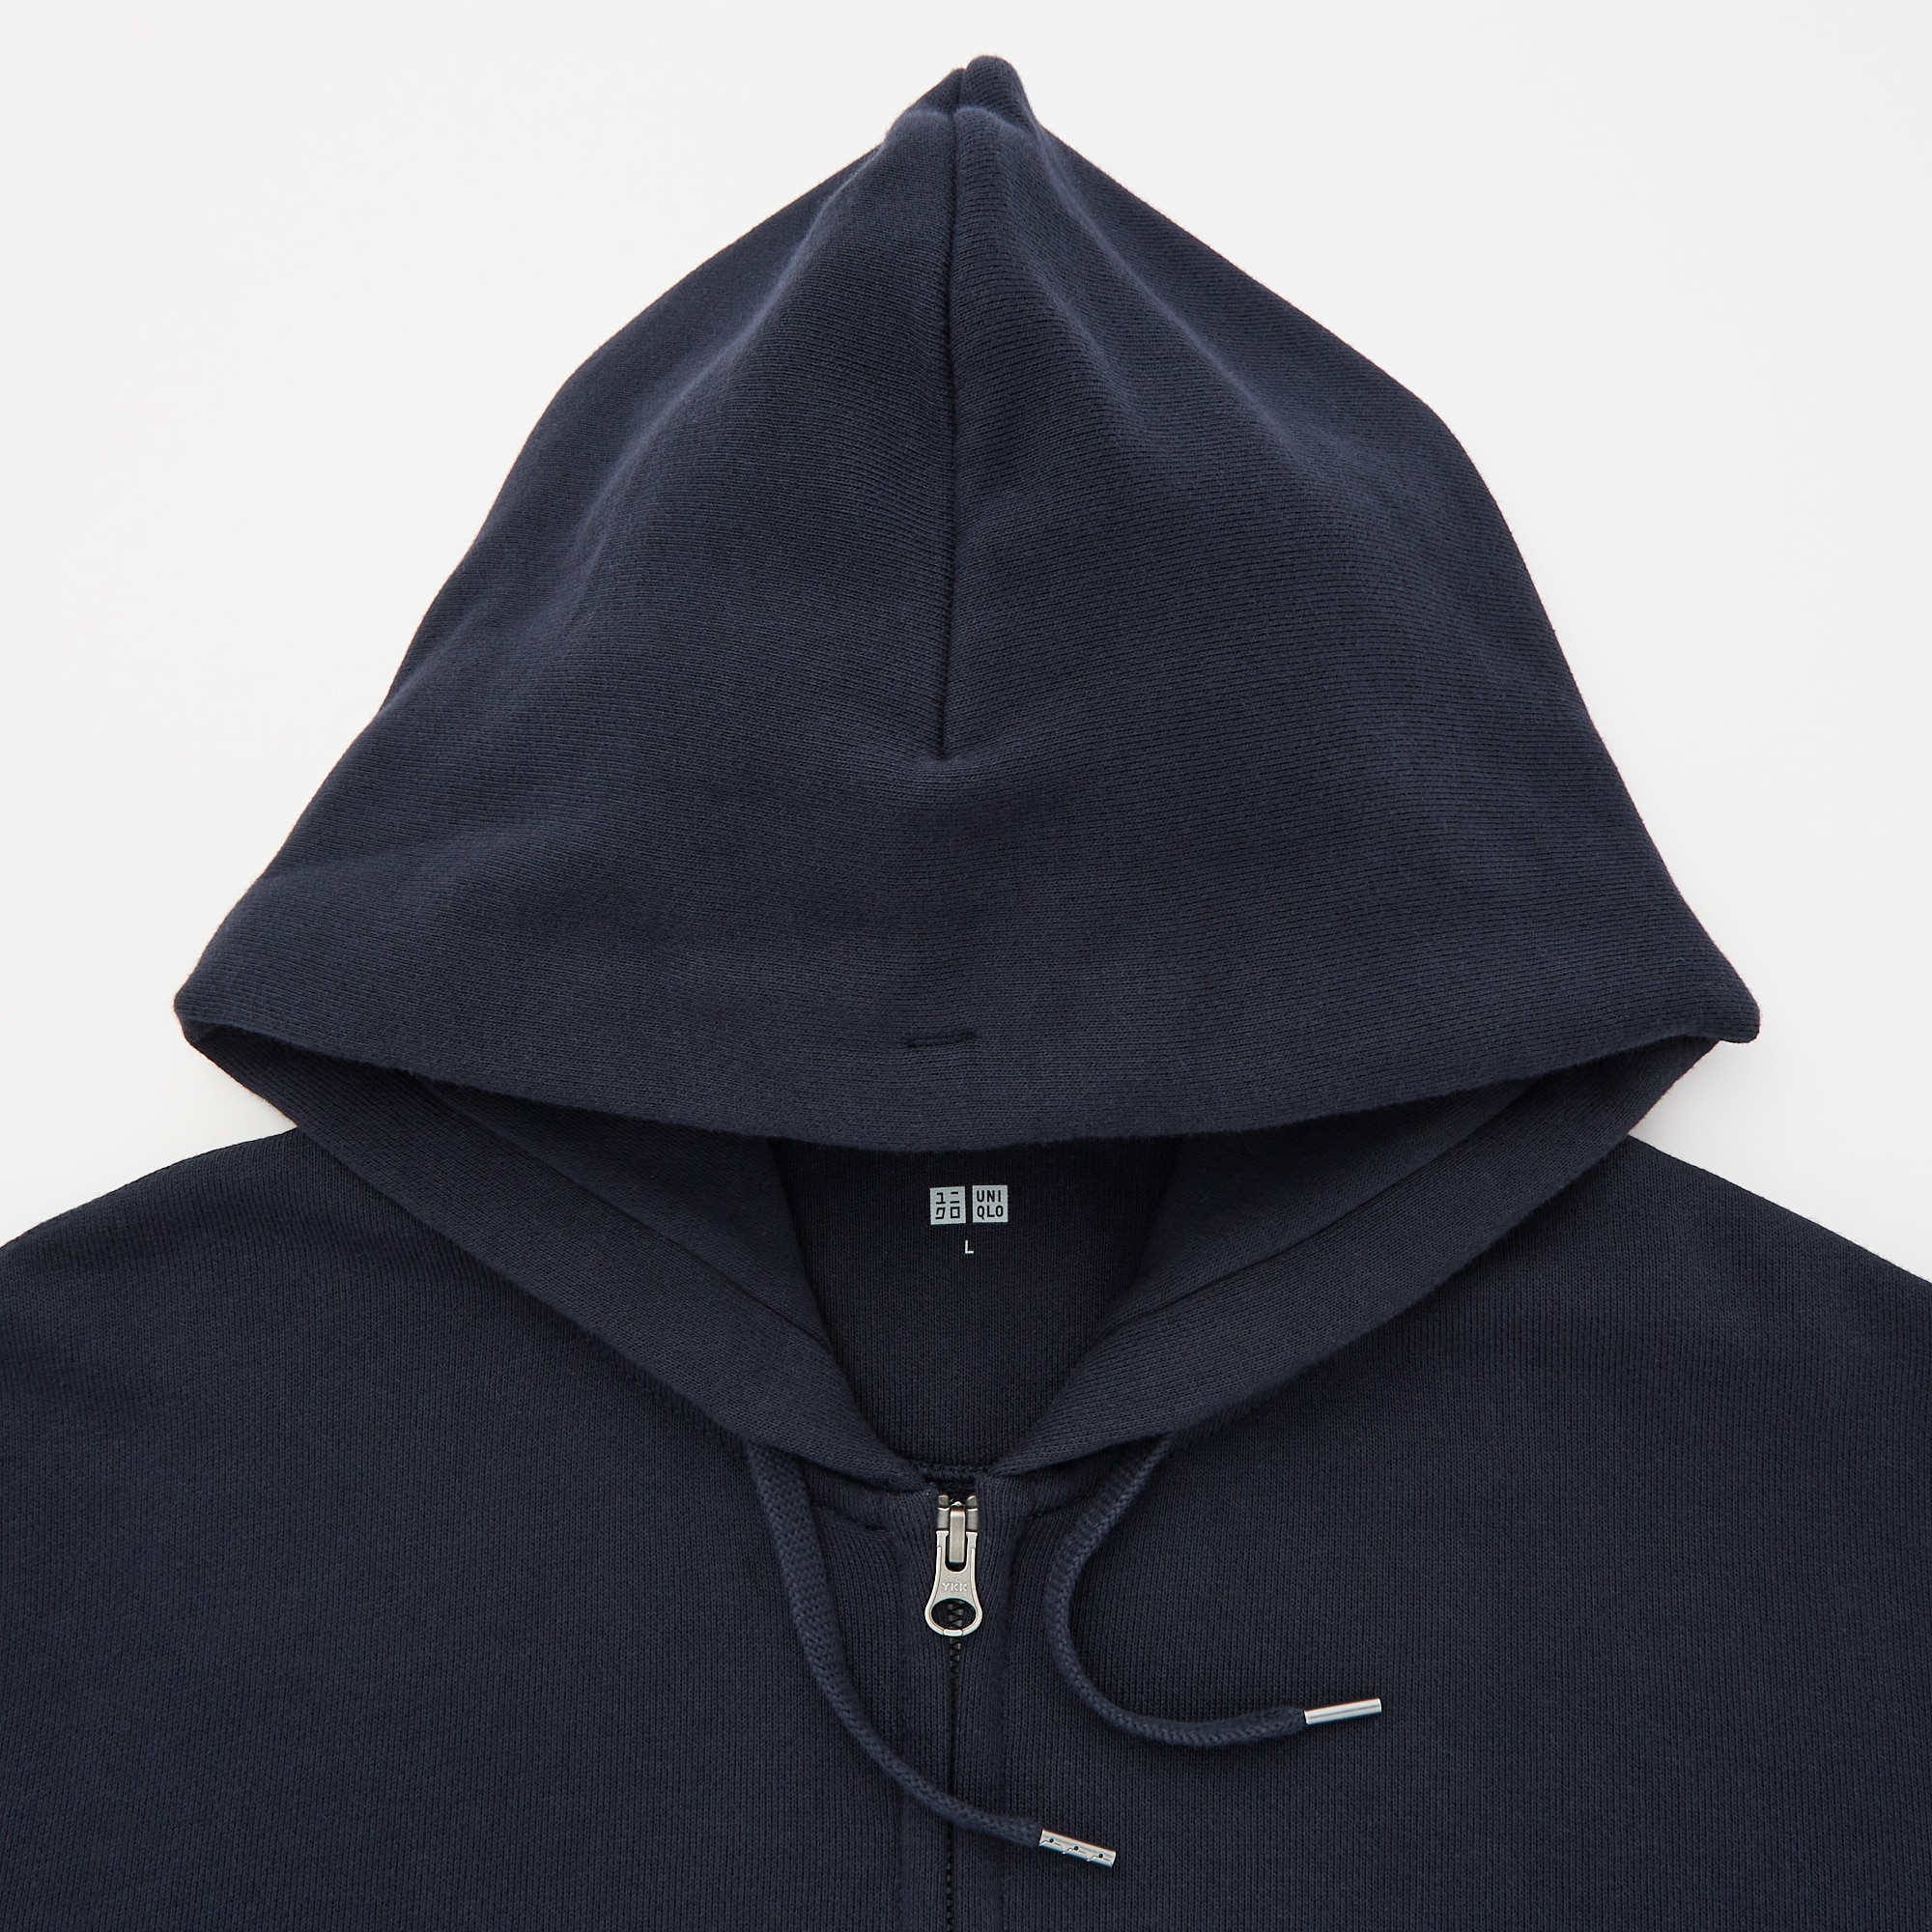 UNIQLO  Sweatshirts Hoodies  Joggers  MEN  Online store